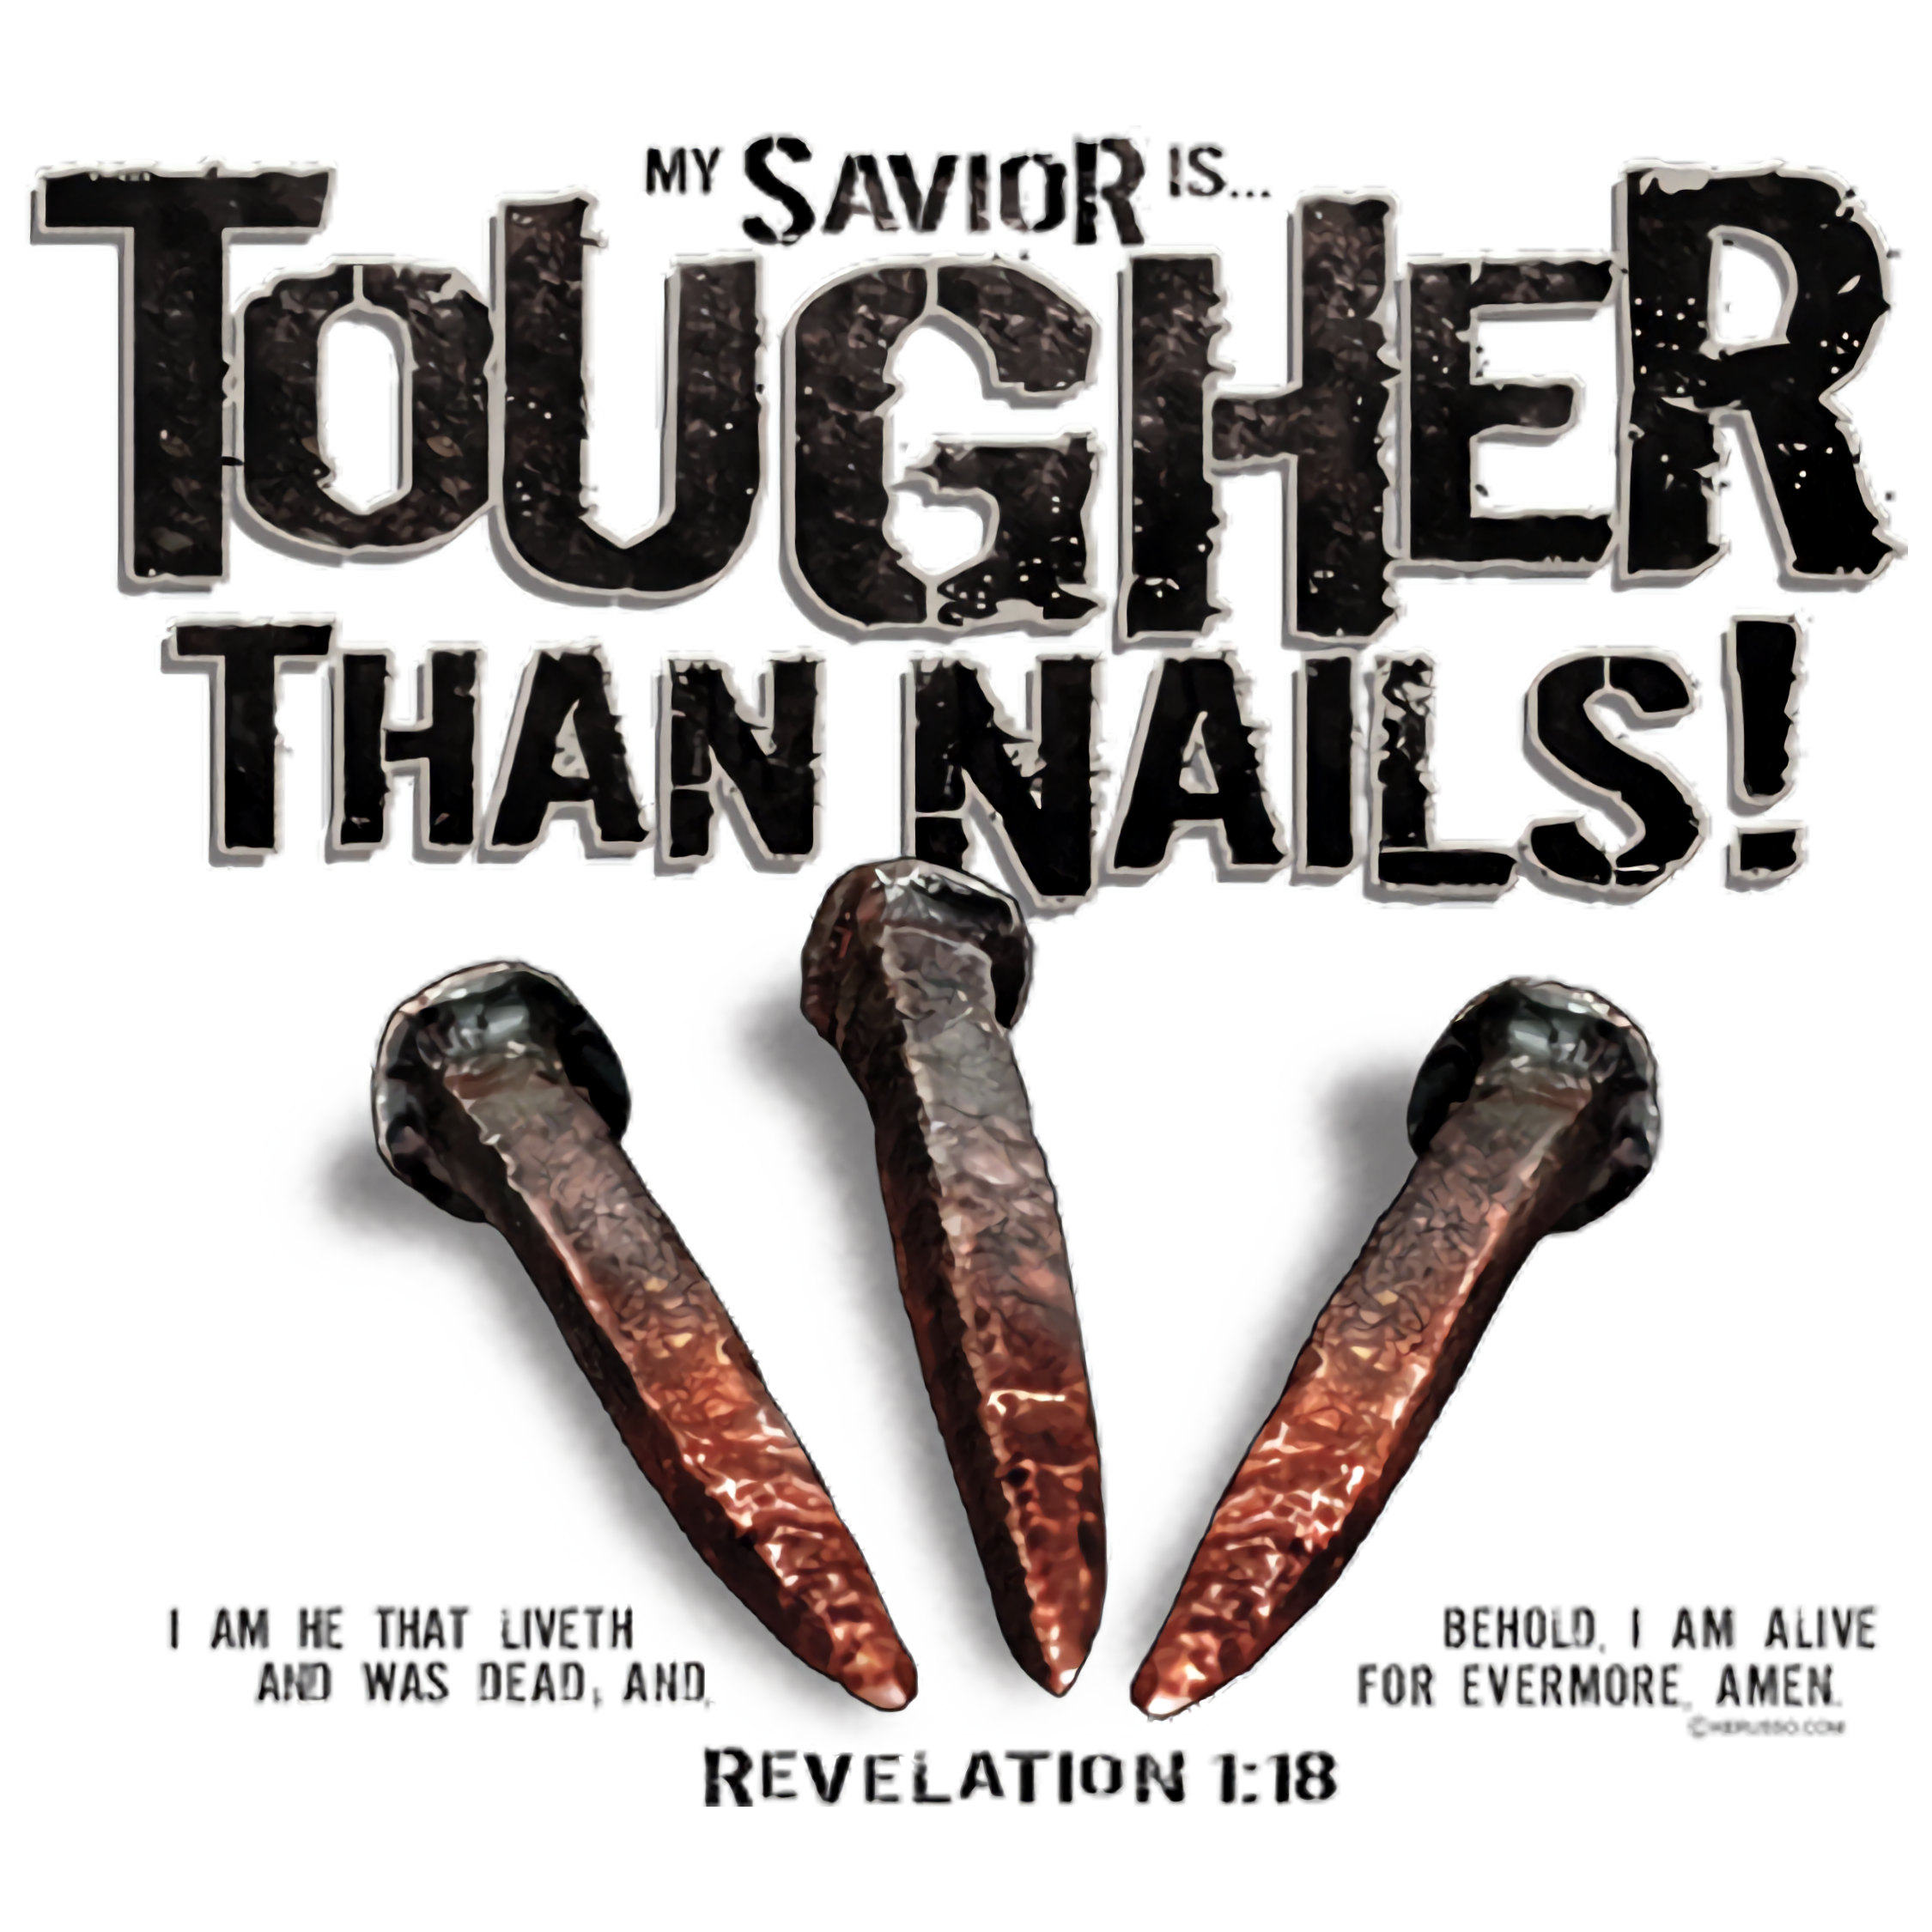 Tougher Than Nails